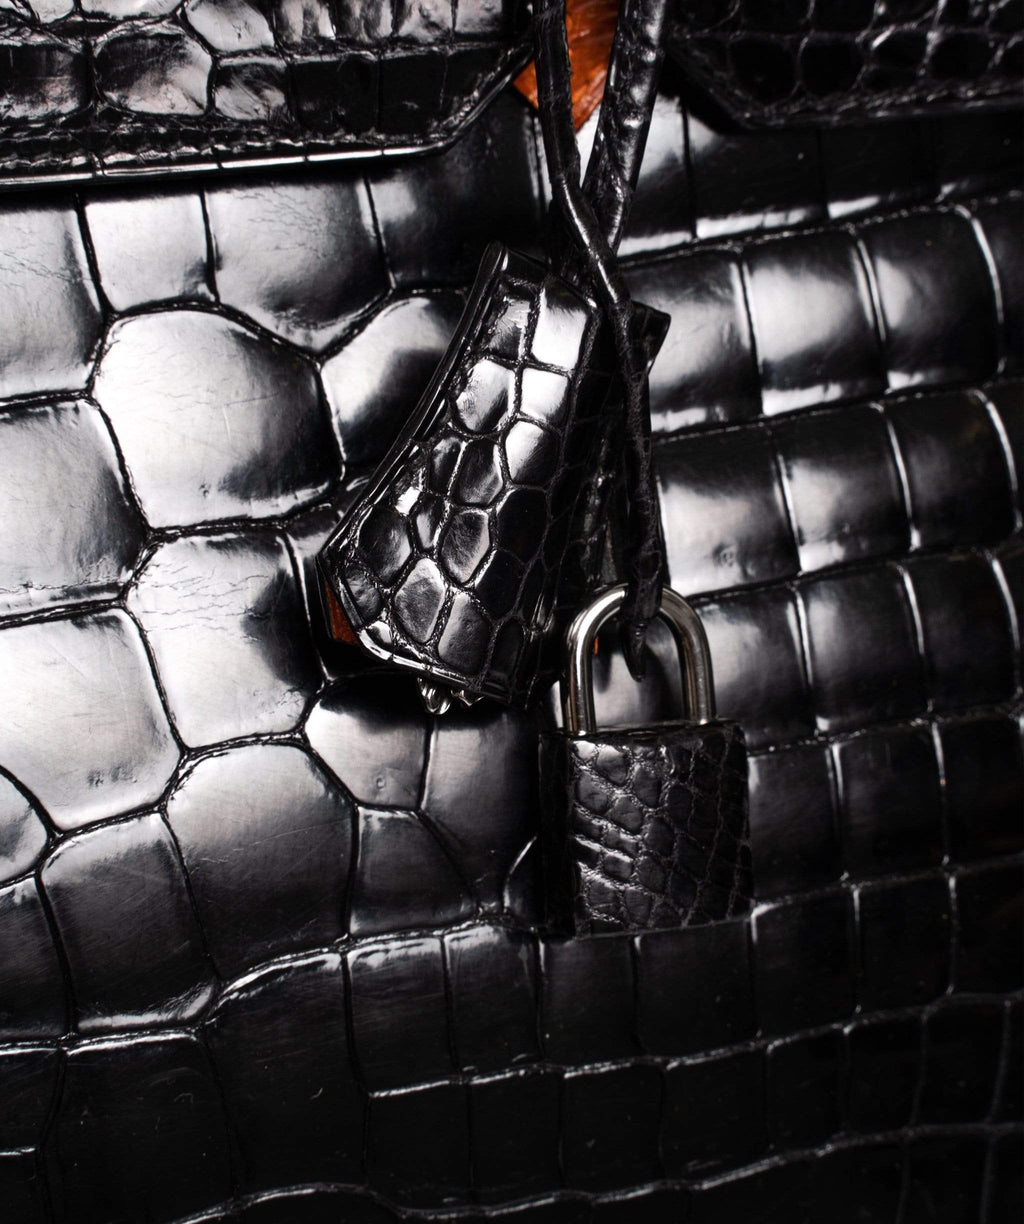 Preloved Hermès Birkin 35 Black and Feu Shiny Porosus Croc with